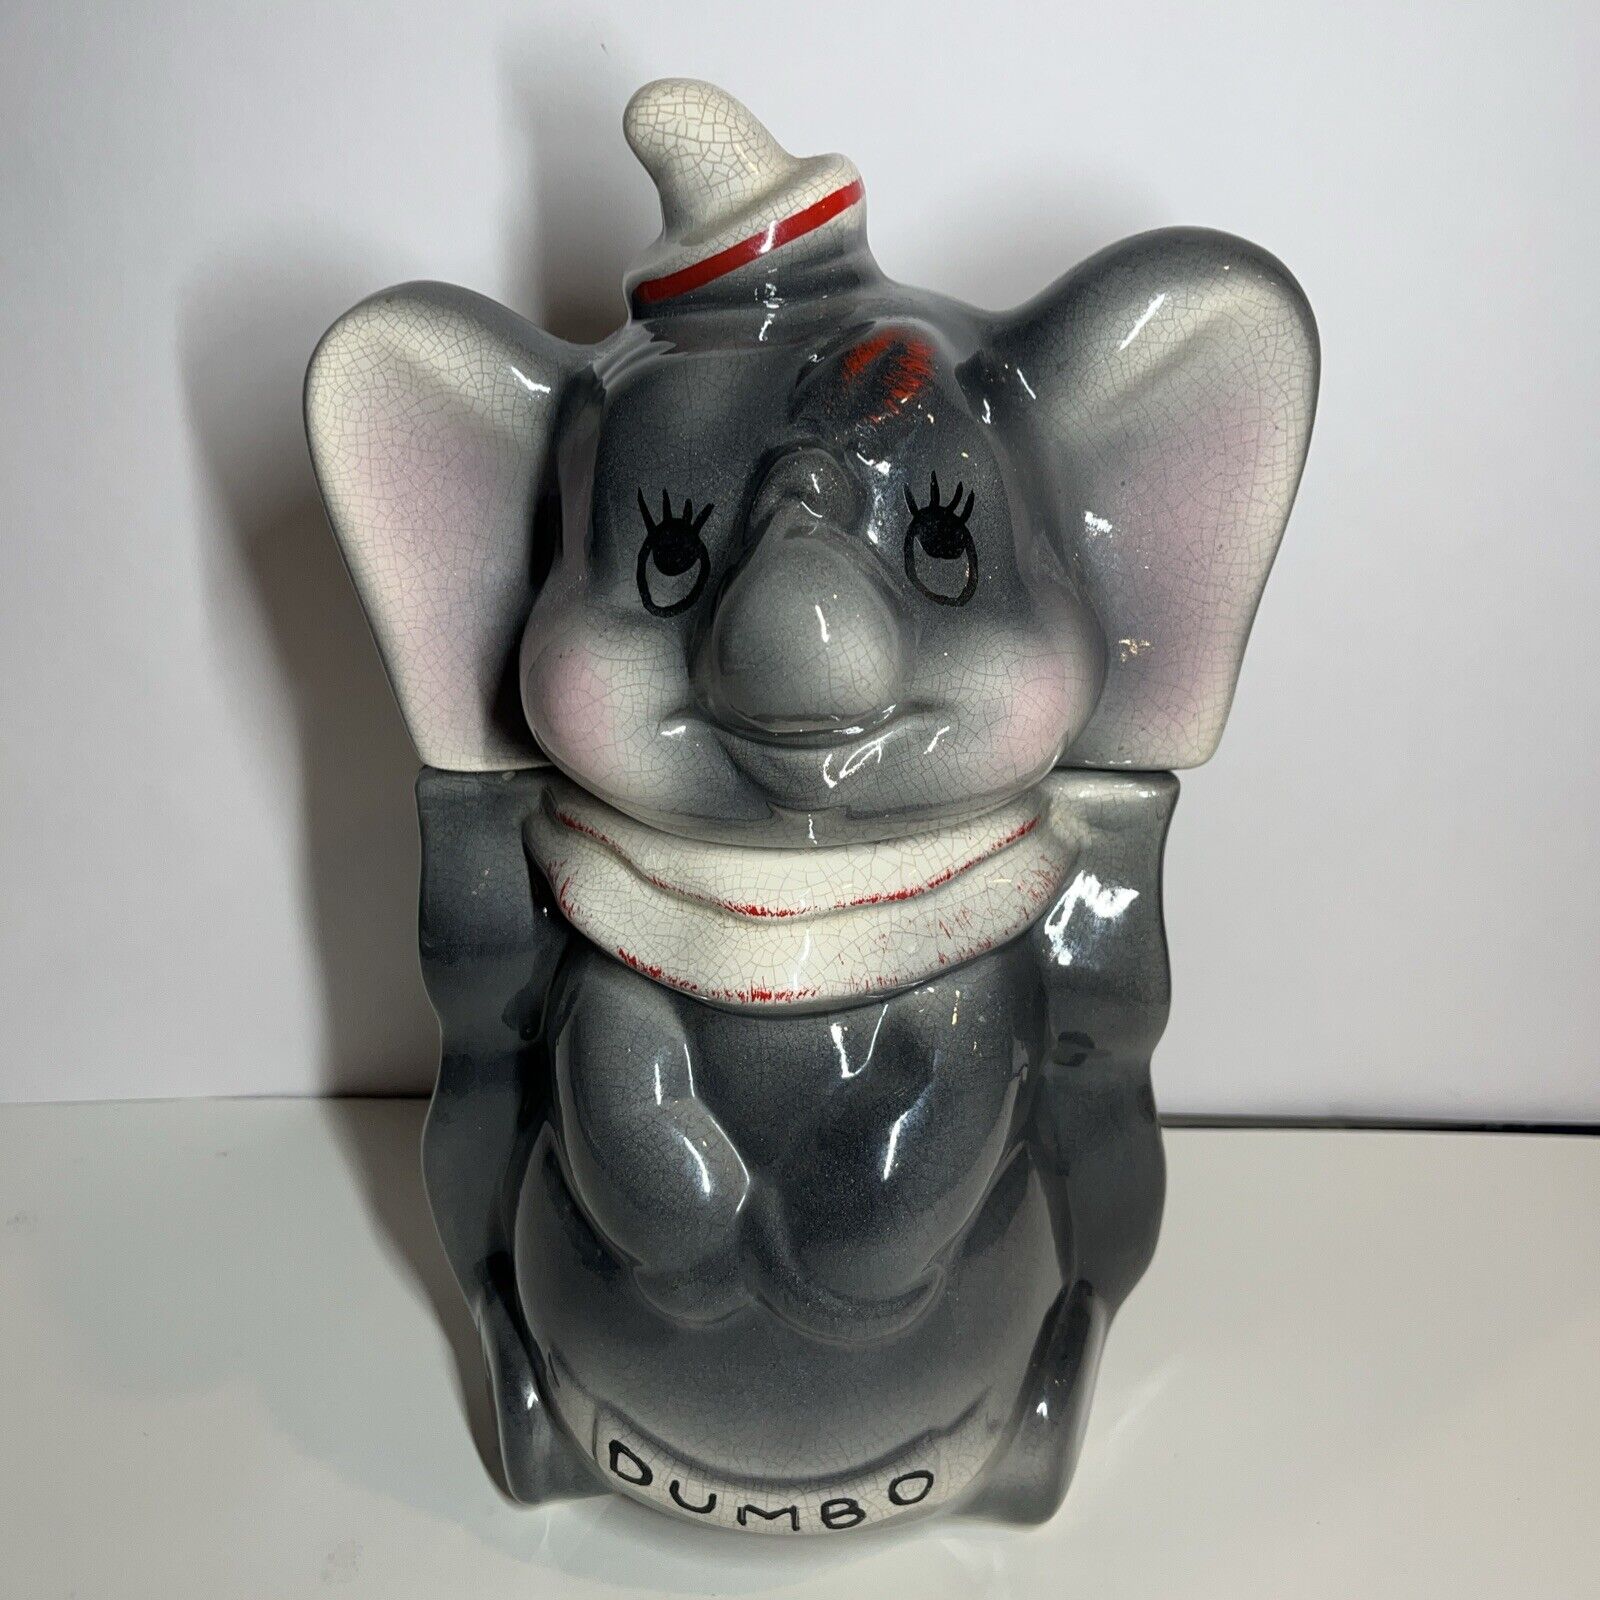 Gorgeous Vintage 1940s Walt Disney Dumbo Turnabout Porcelain Ceramic Cookie Jar